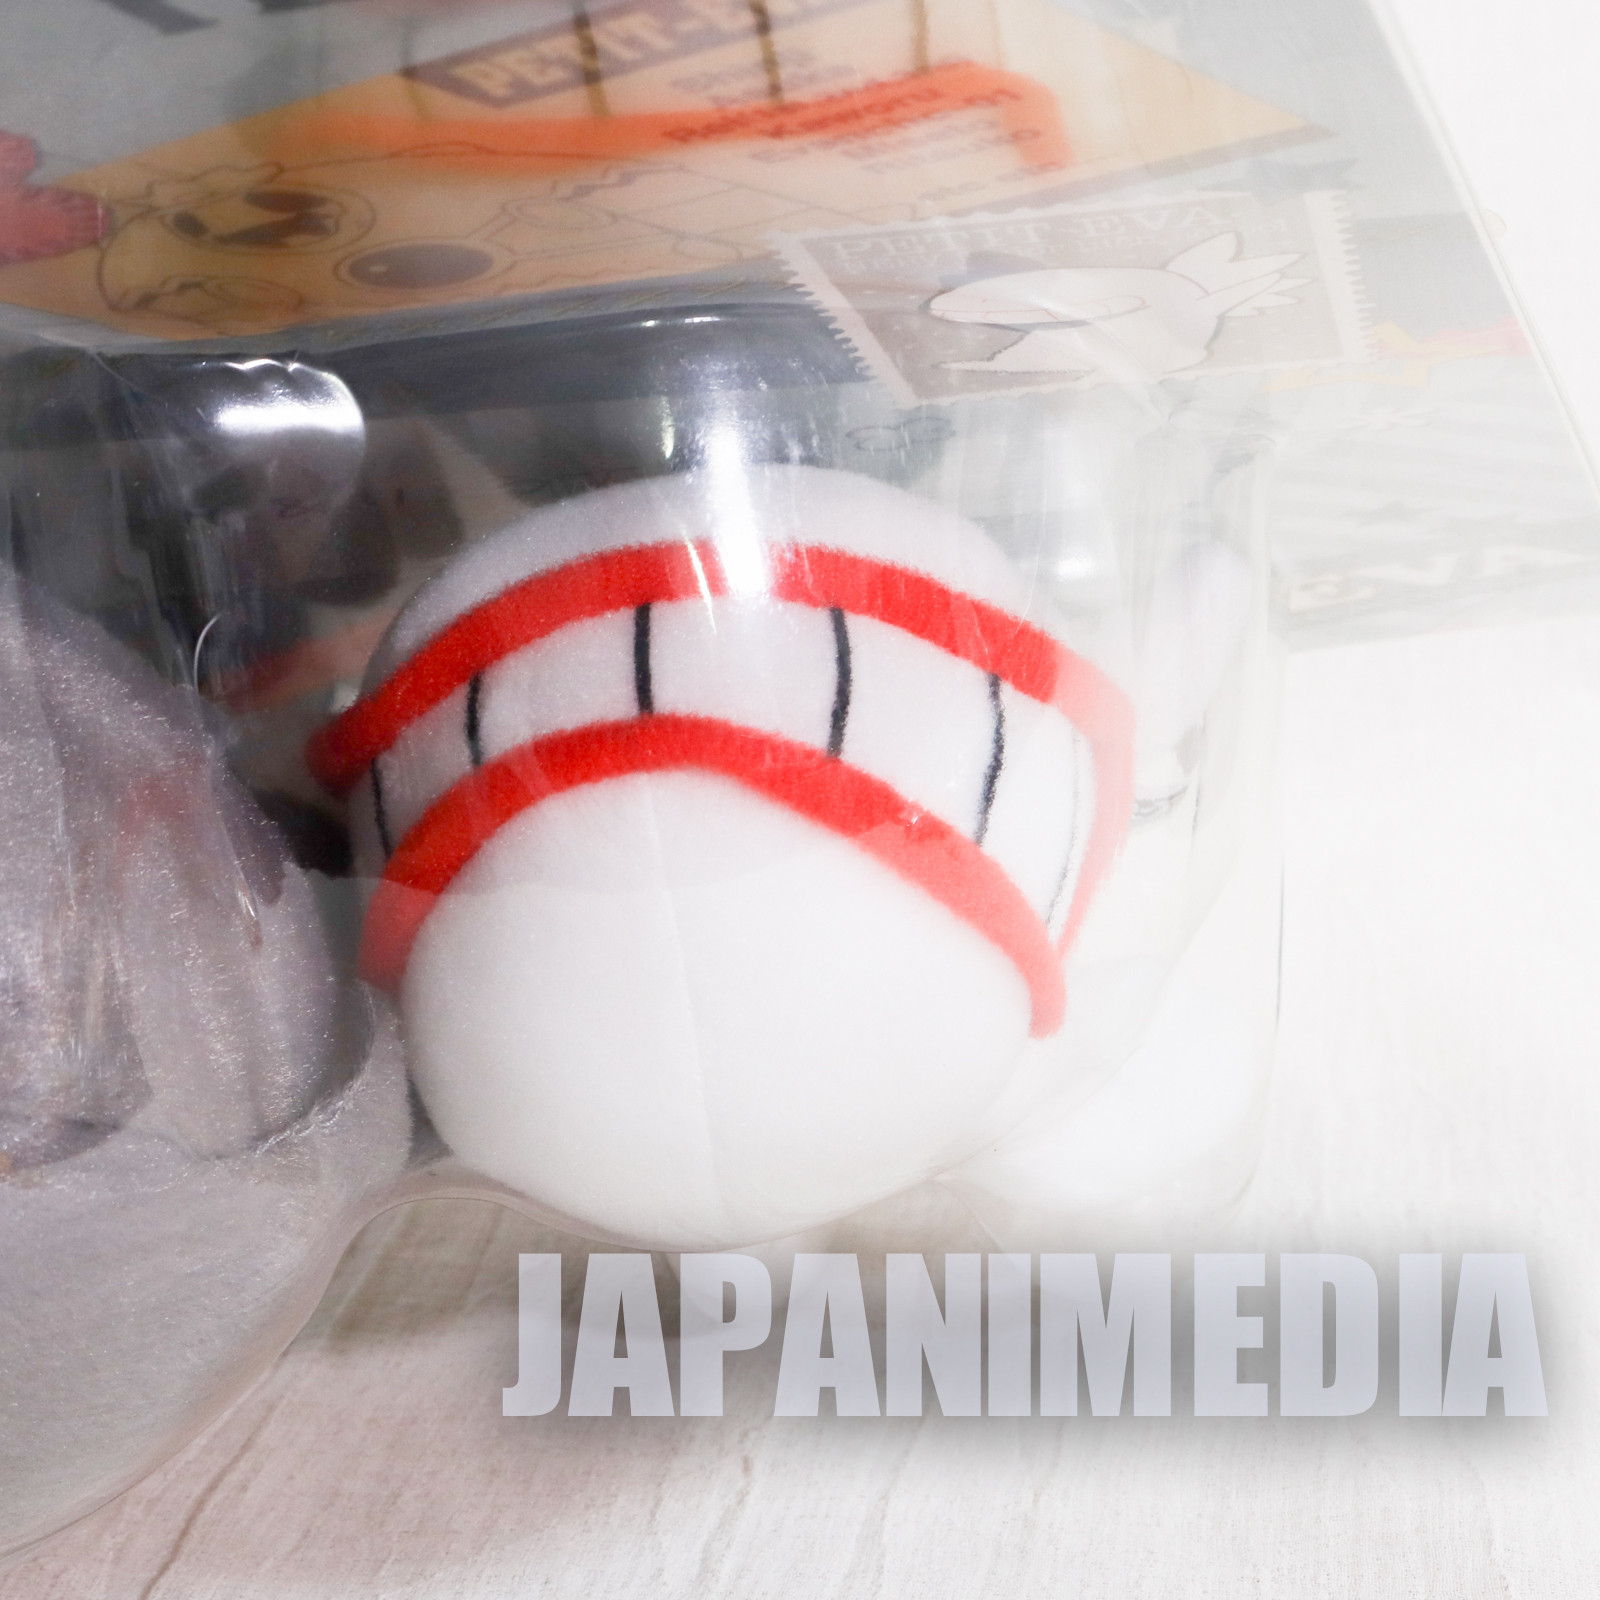 Evangelion Nagisa Kaworu & Mass Production Type EVA Series Petit-Eva Plush Doll